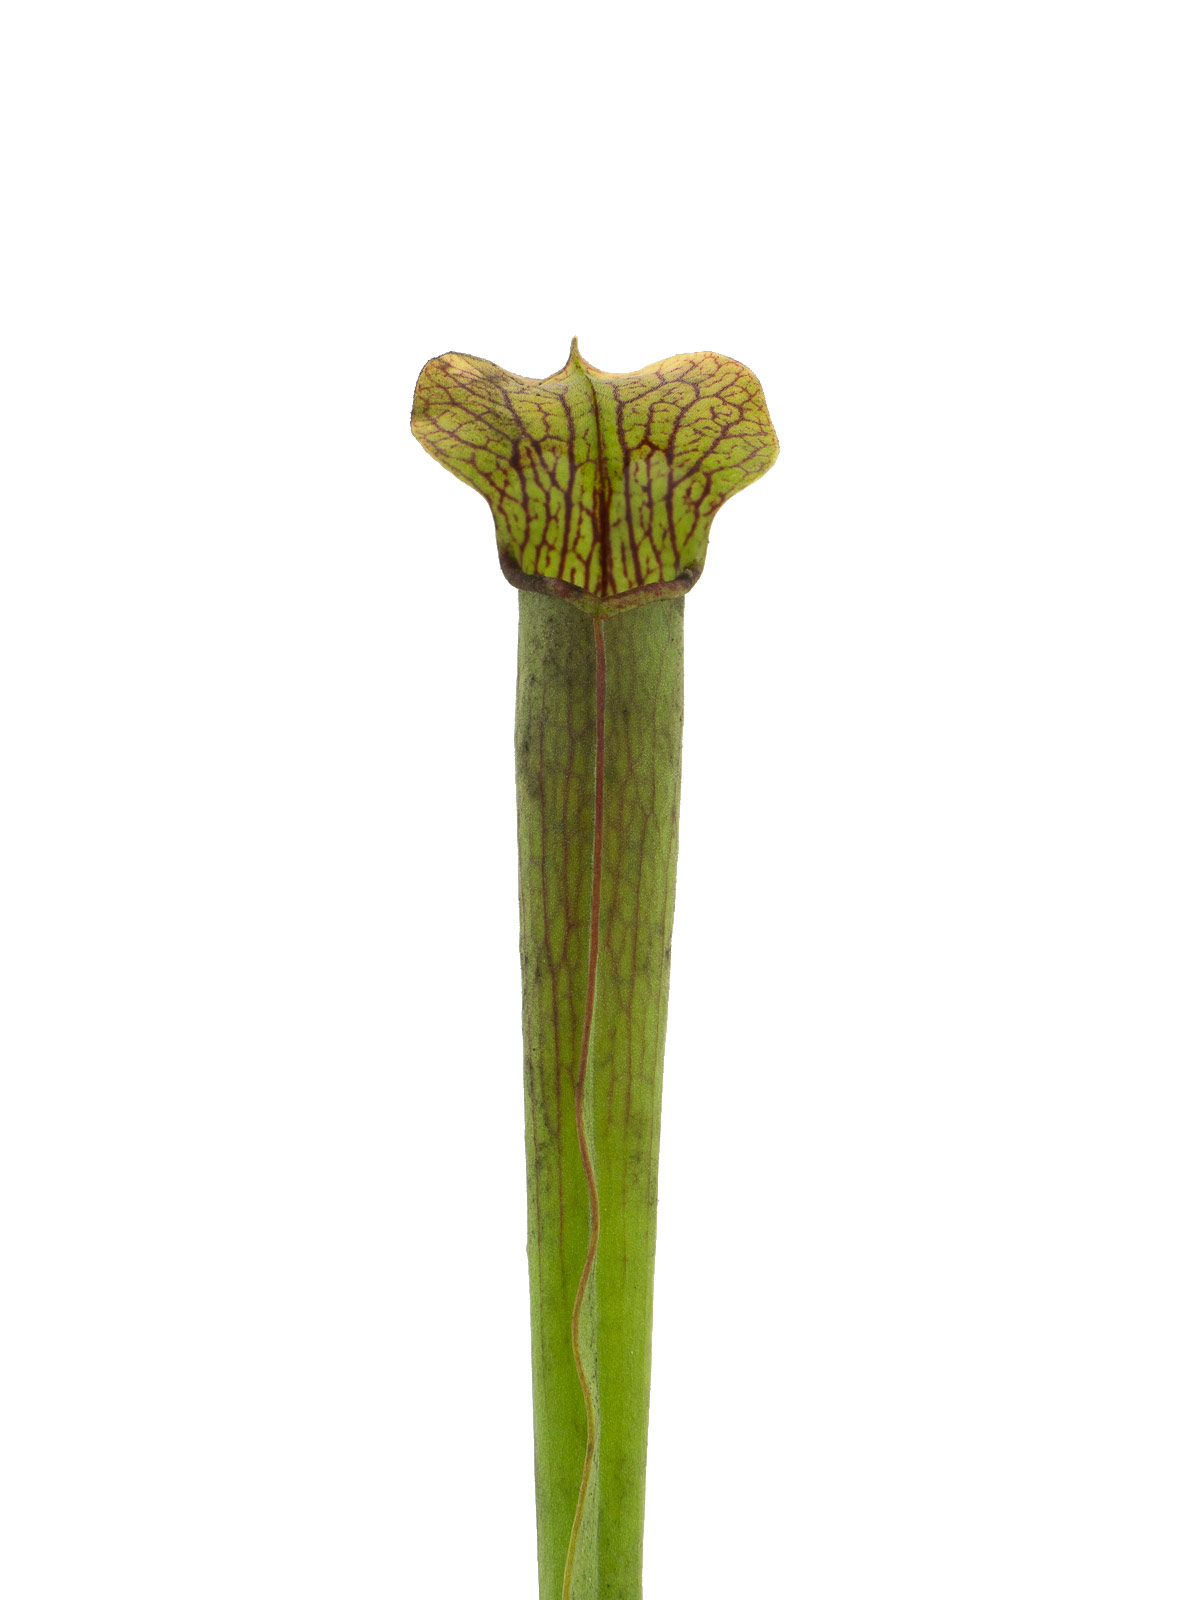 Sarracenia rubra ssp. rubra - MK RR11B, Taylor County, Georgia